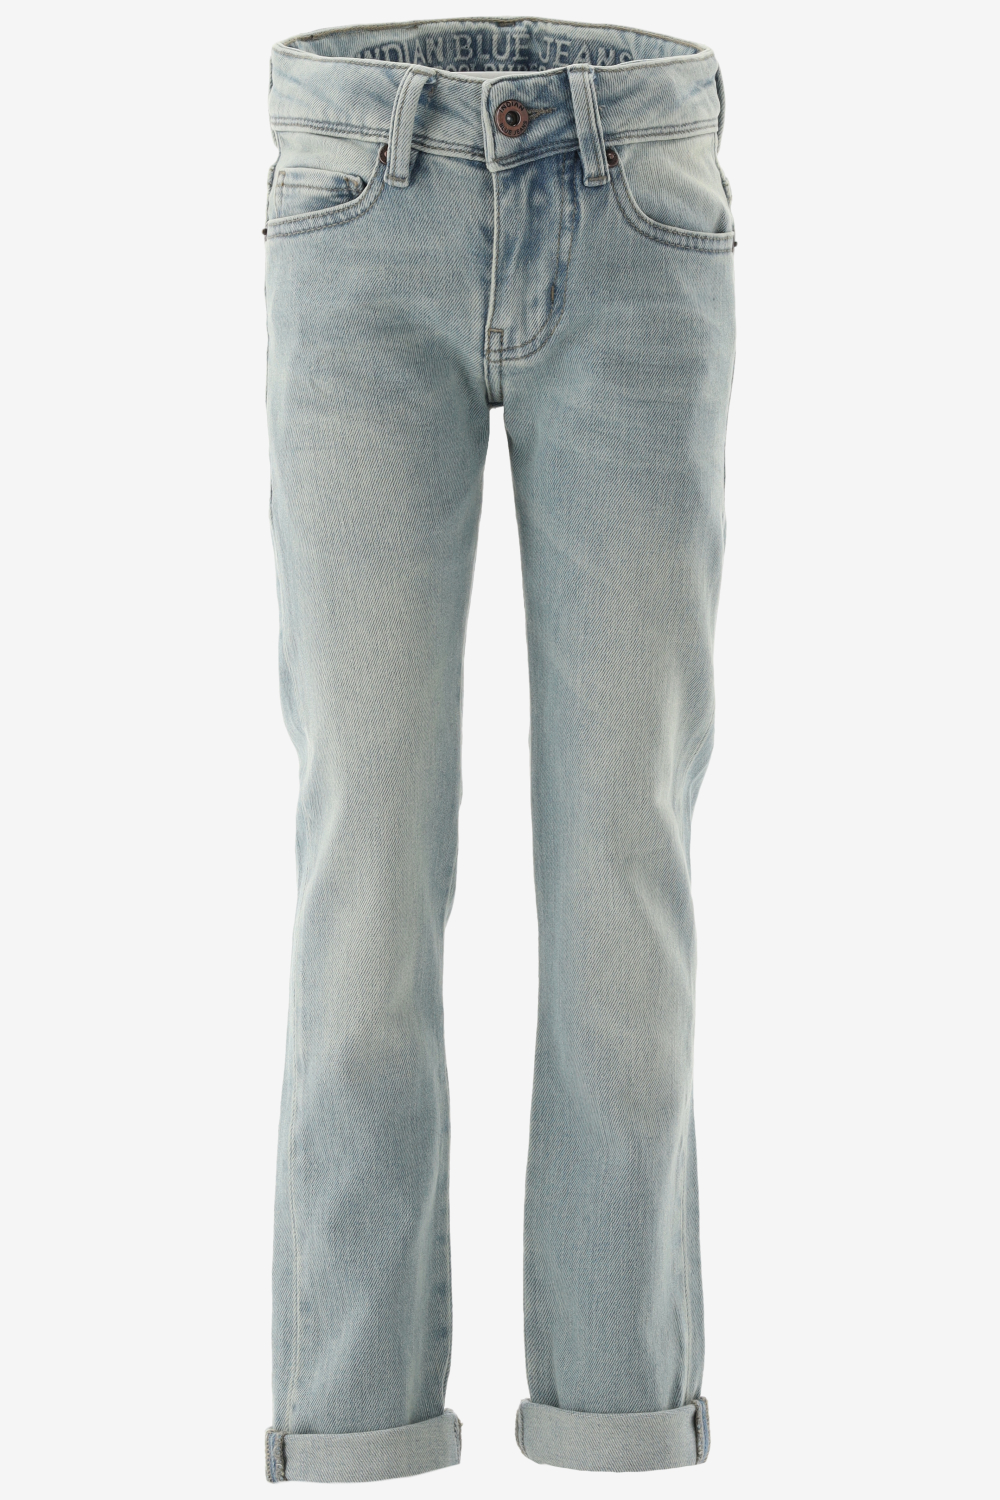 Indian Blue Jeans - Jeans - Light Denim - Maat 140